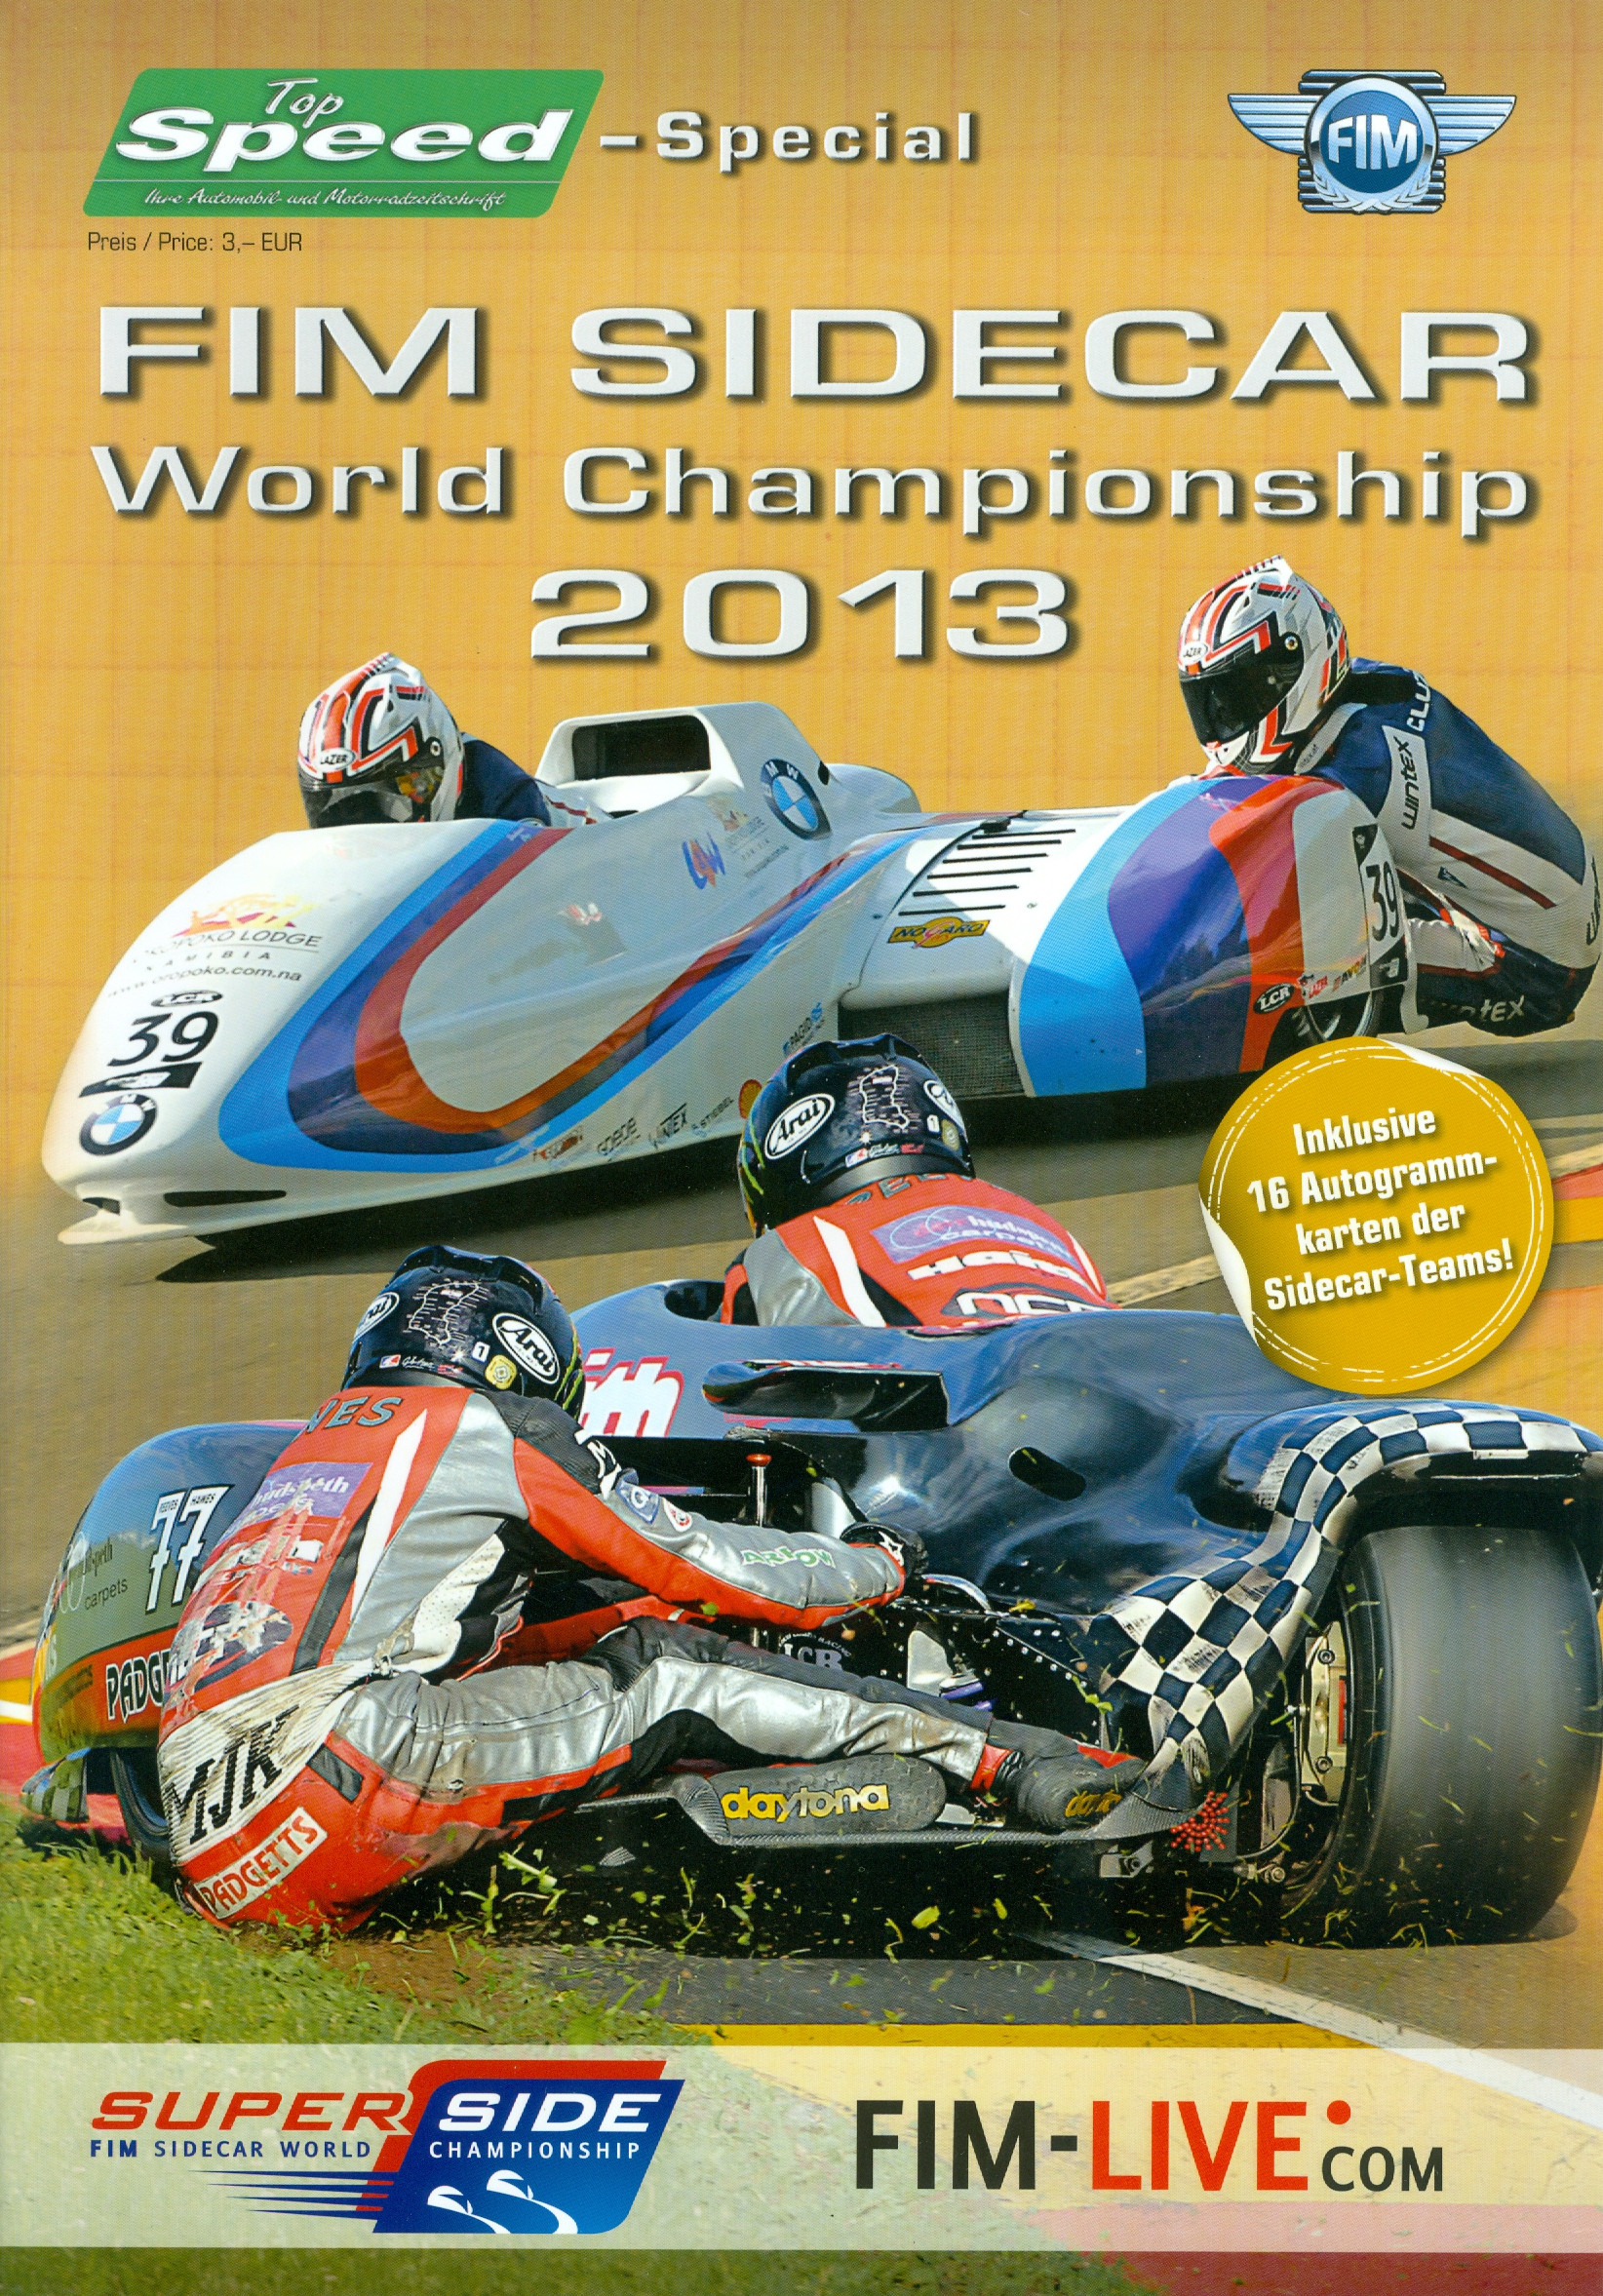 FIM Sidecar World Championship Magazines | The Motor Racing Programme